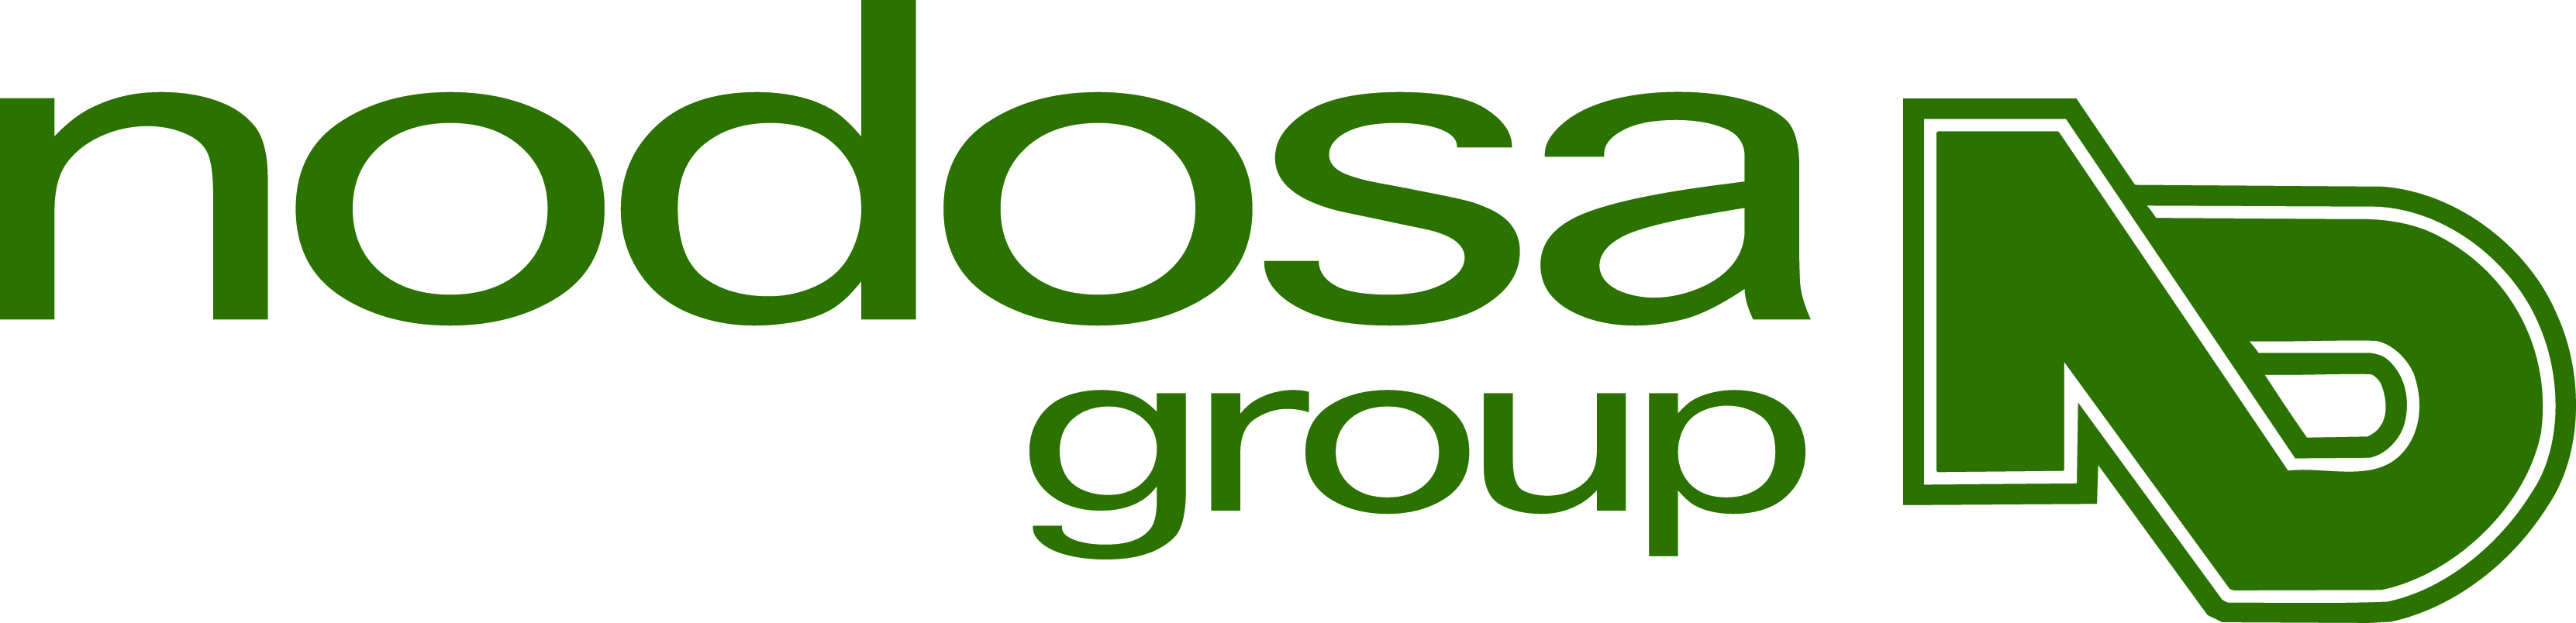 NODOSA group logo